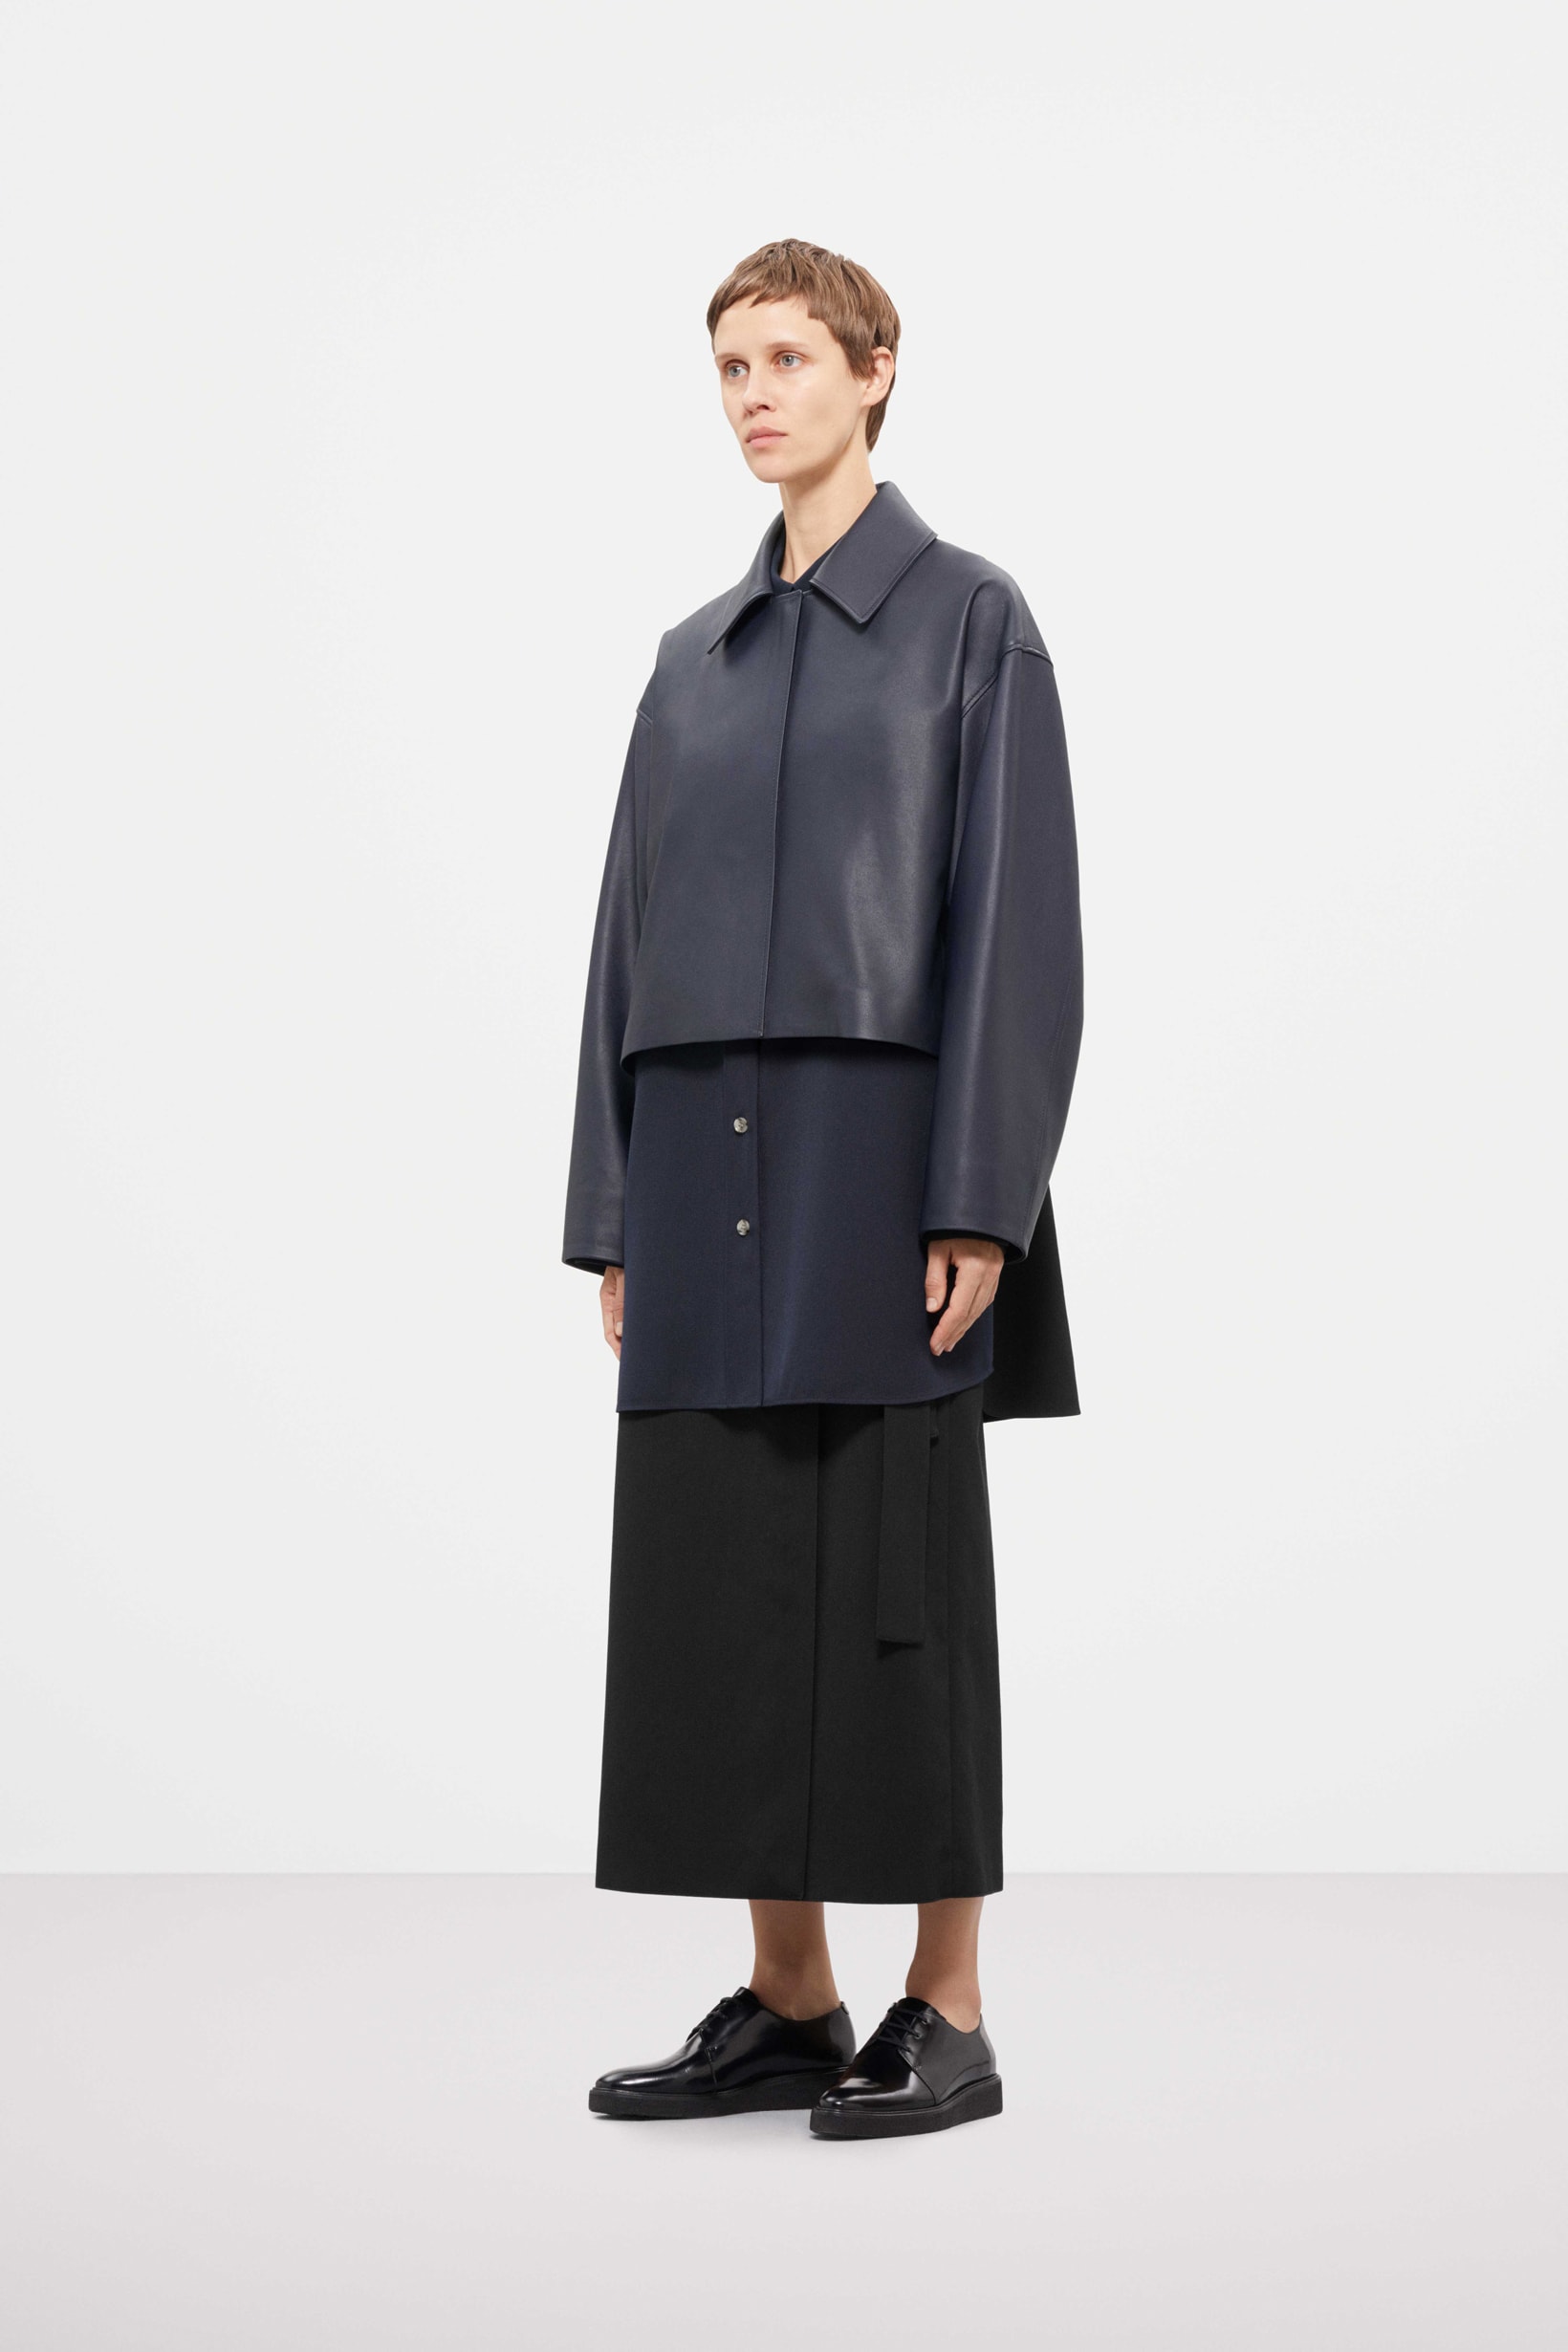 Cos Fall Winter 2019 Lookbook Jacket Blue Skirt Black